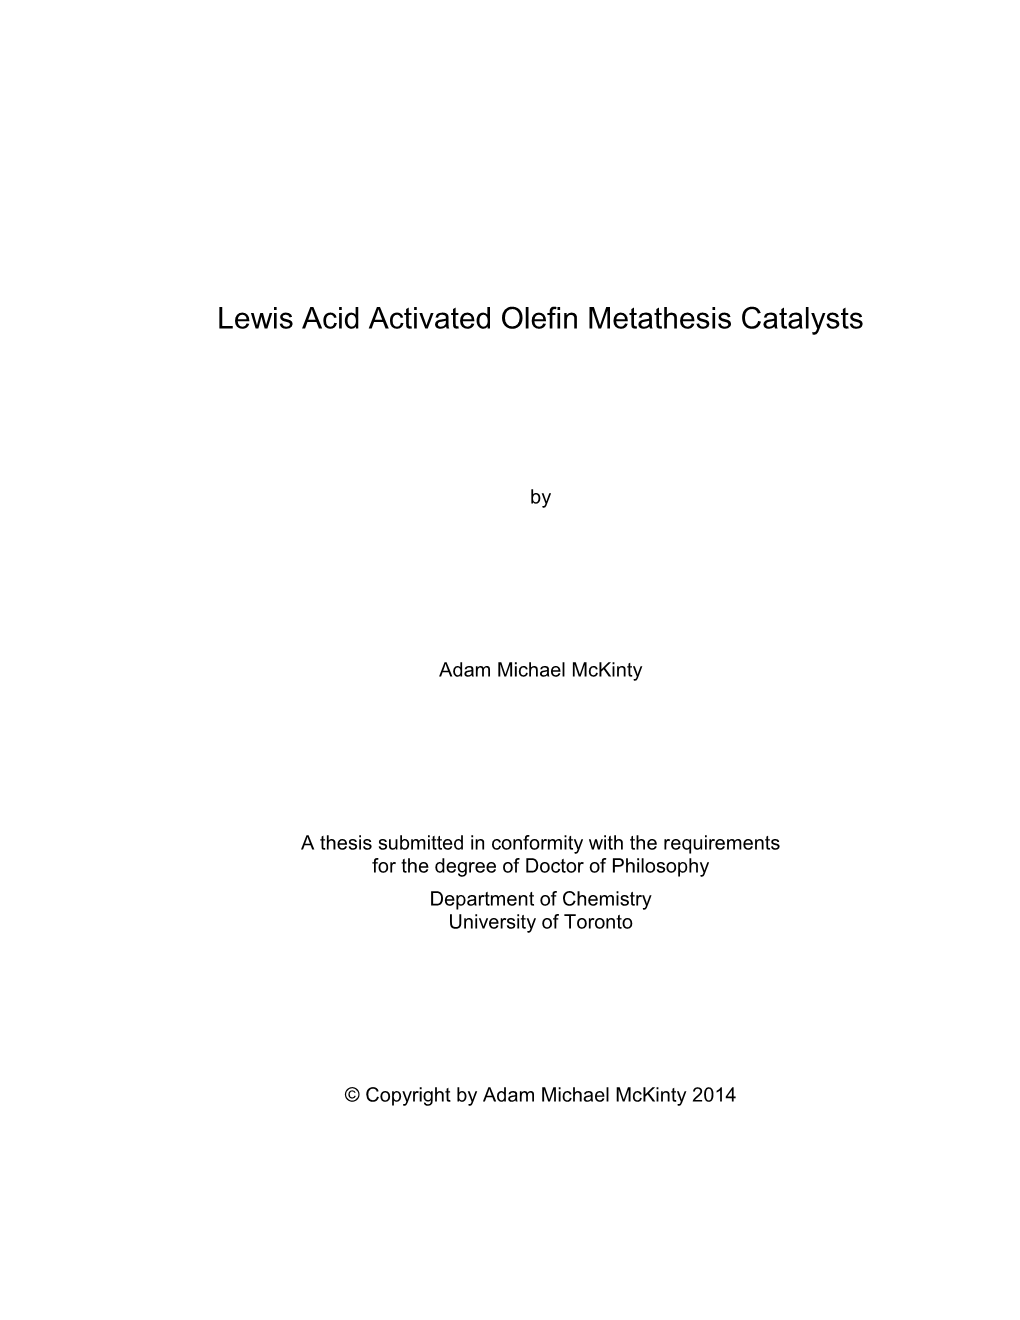 Lewis Acid Activated Olefin Metathesis Catalysts